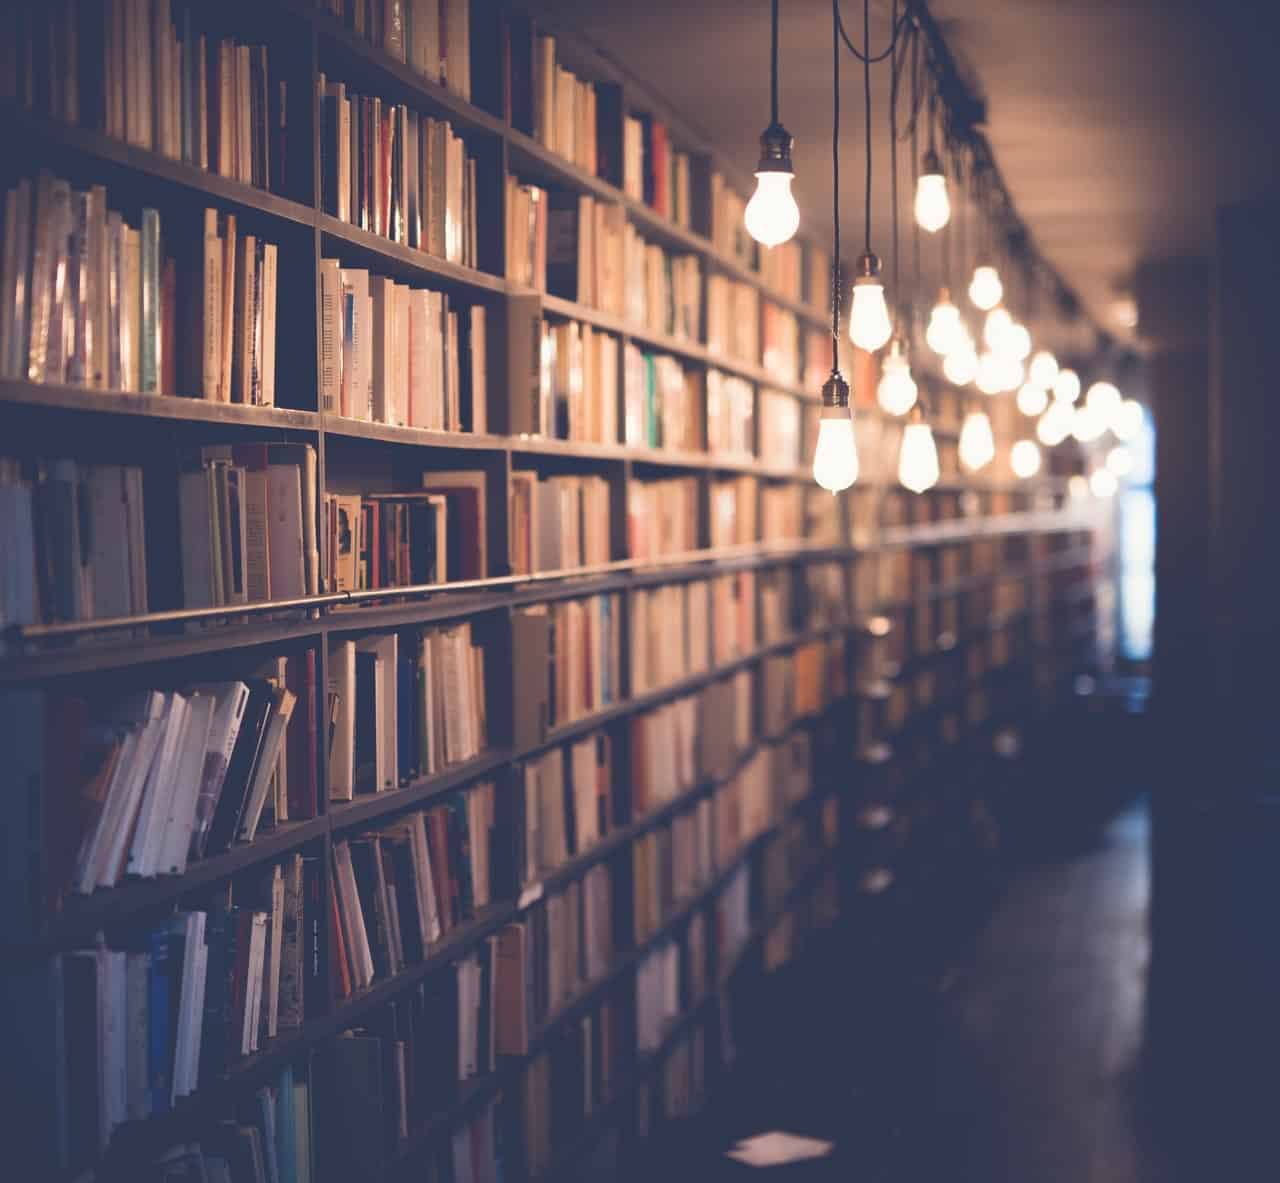 blur-book-stack-books-bookshelves